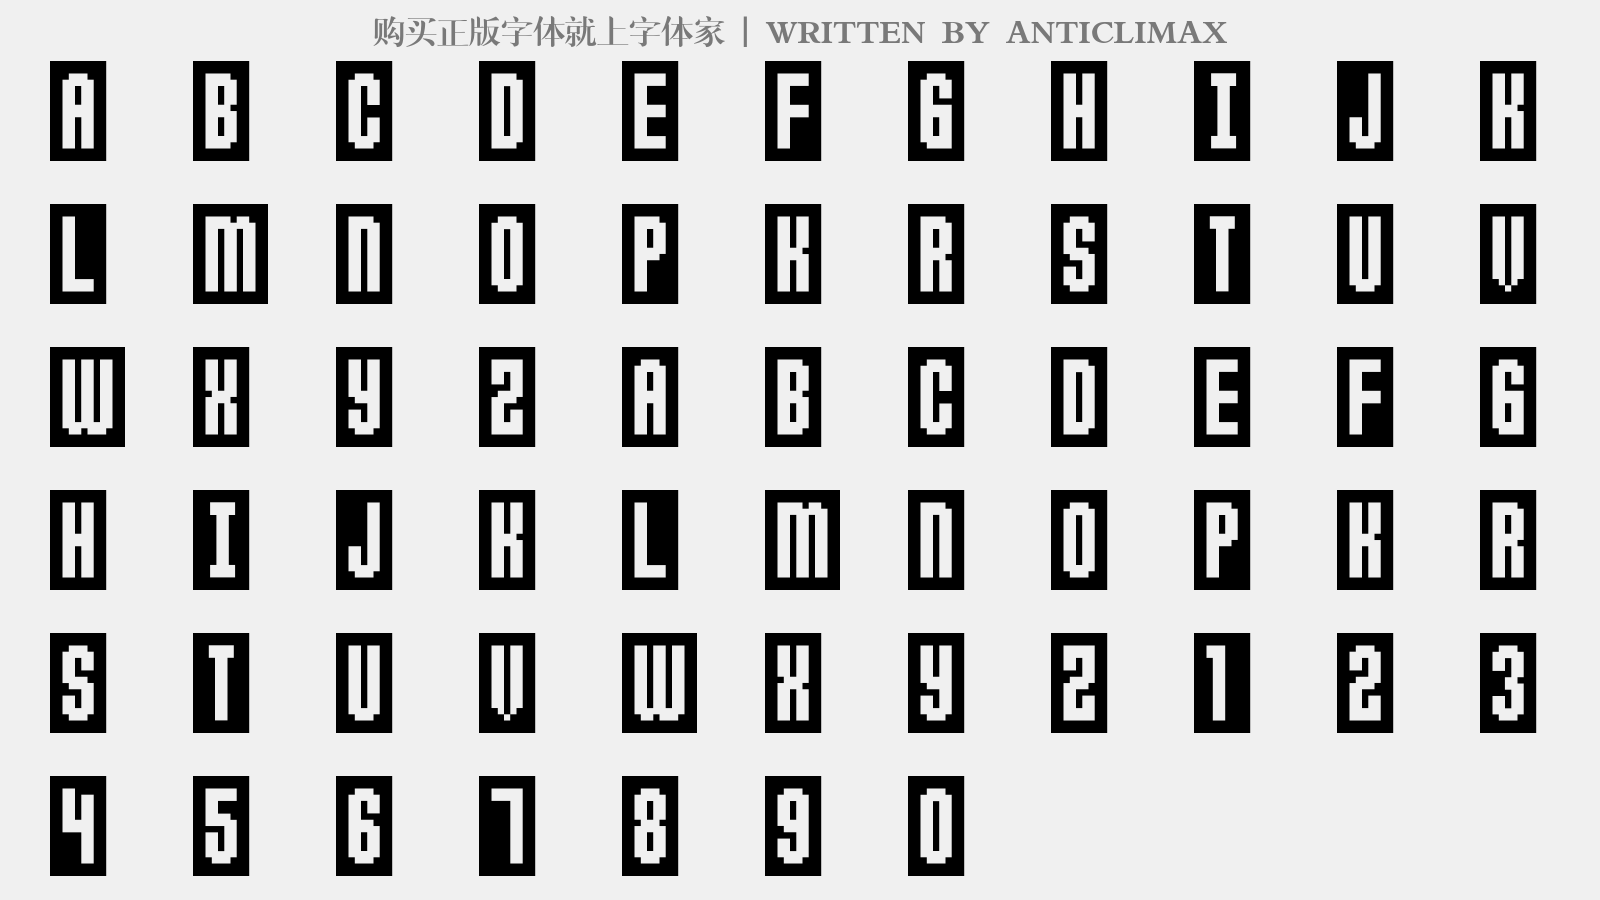 ANTICLIMAX - 大写字母/小写字母/数字